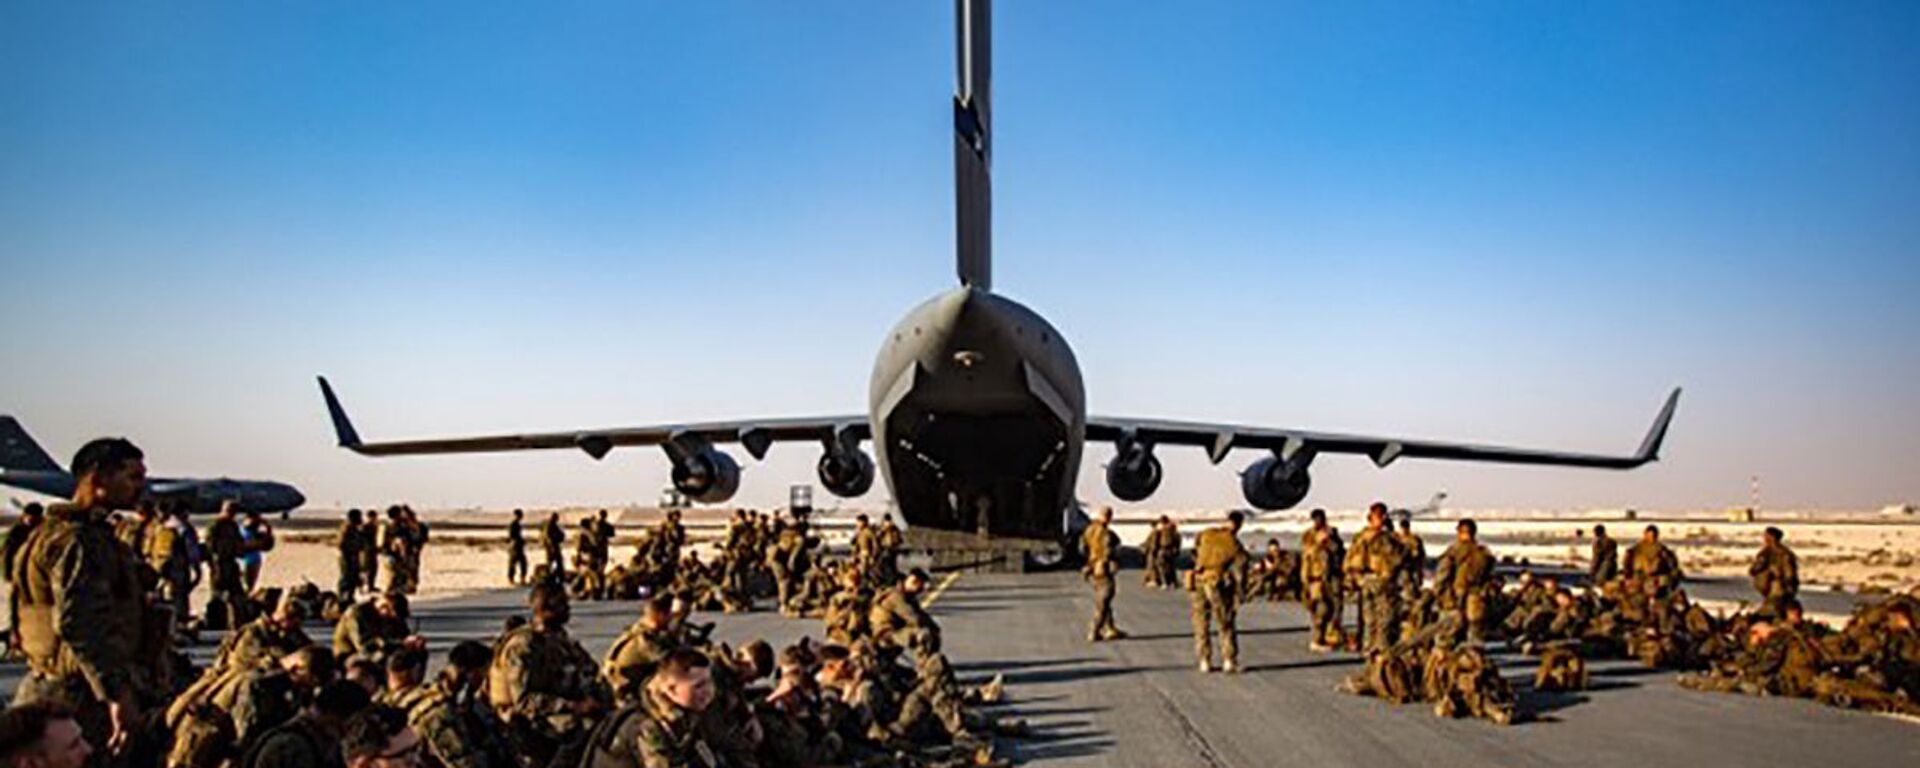 Marines assigned to the 24th Marine Expeditionary Unit (MEU) await a flight to Kabul Afghanistan, at Al Udeied Air Base, Qatar Tuesday, Aug. 17, 2021 - Sputnik International, 1920